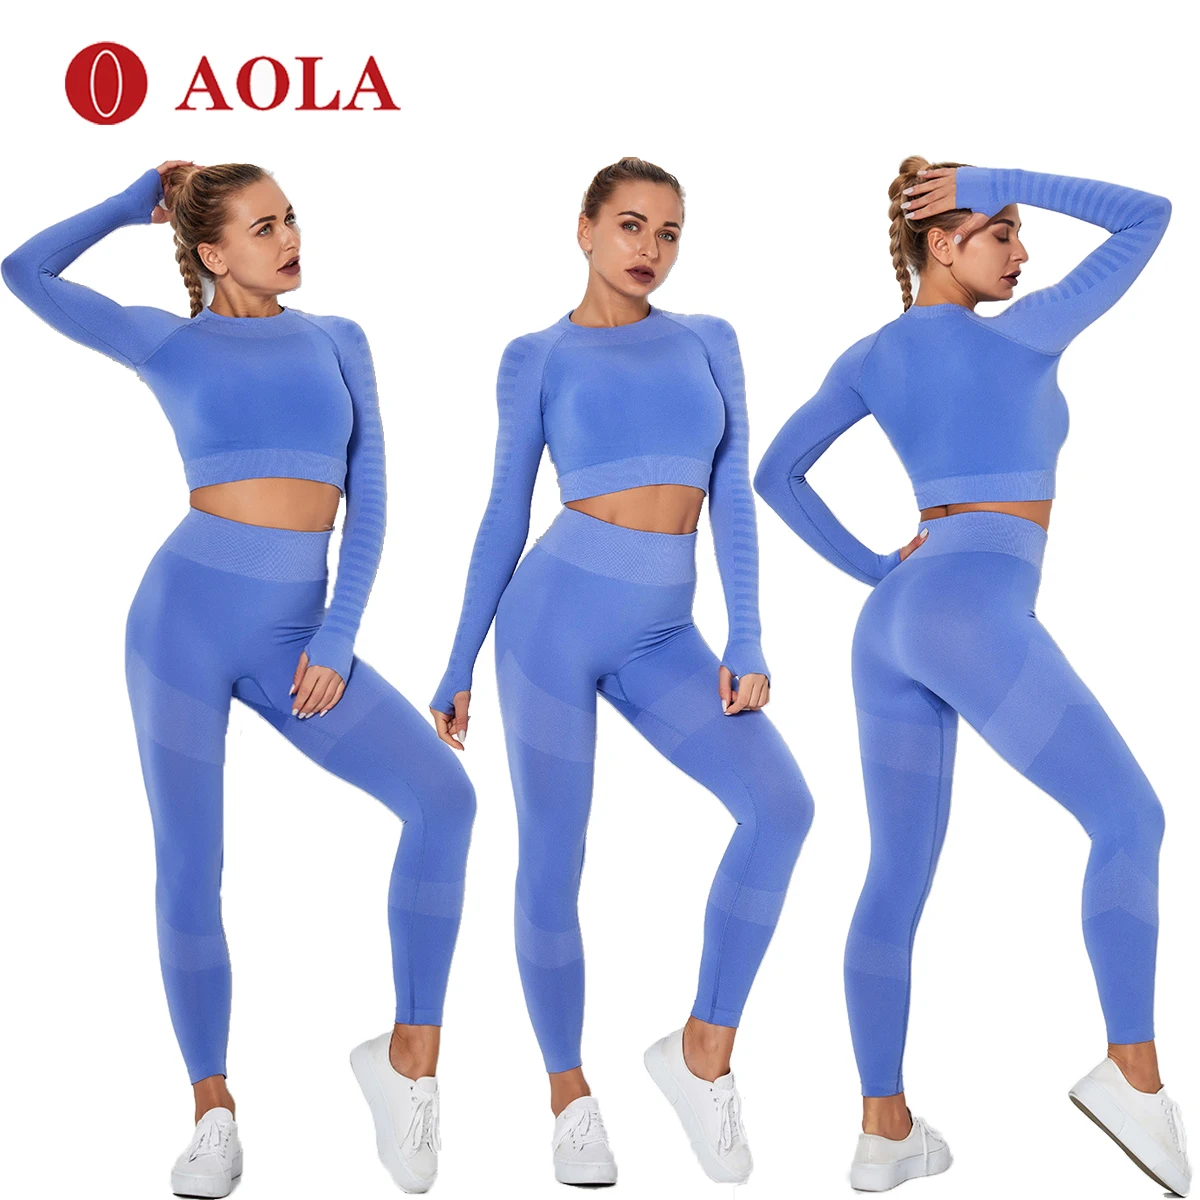 

AOLA Plus Size High waist Seamless Compression Leggins Workout Gym Leggings Fitness Wear Yoga Set